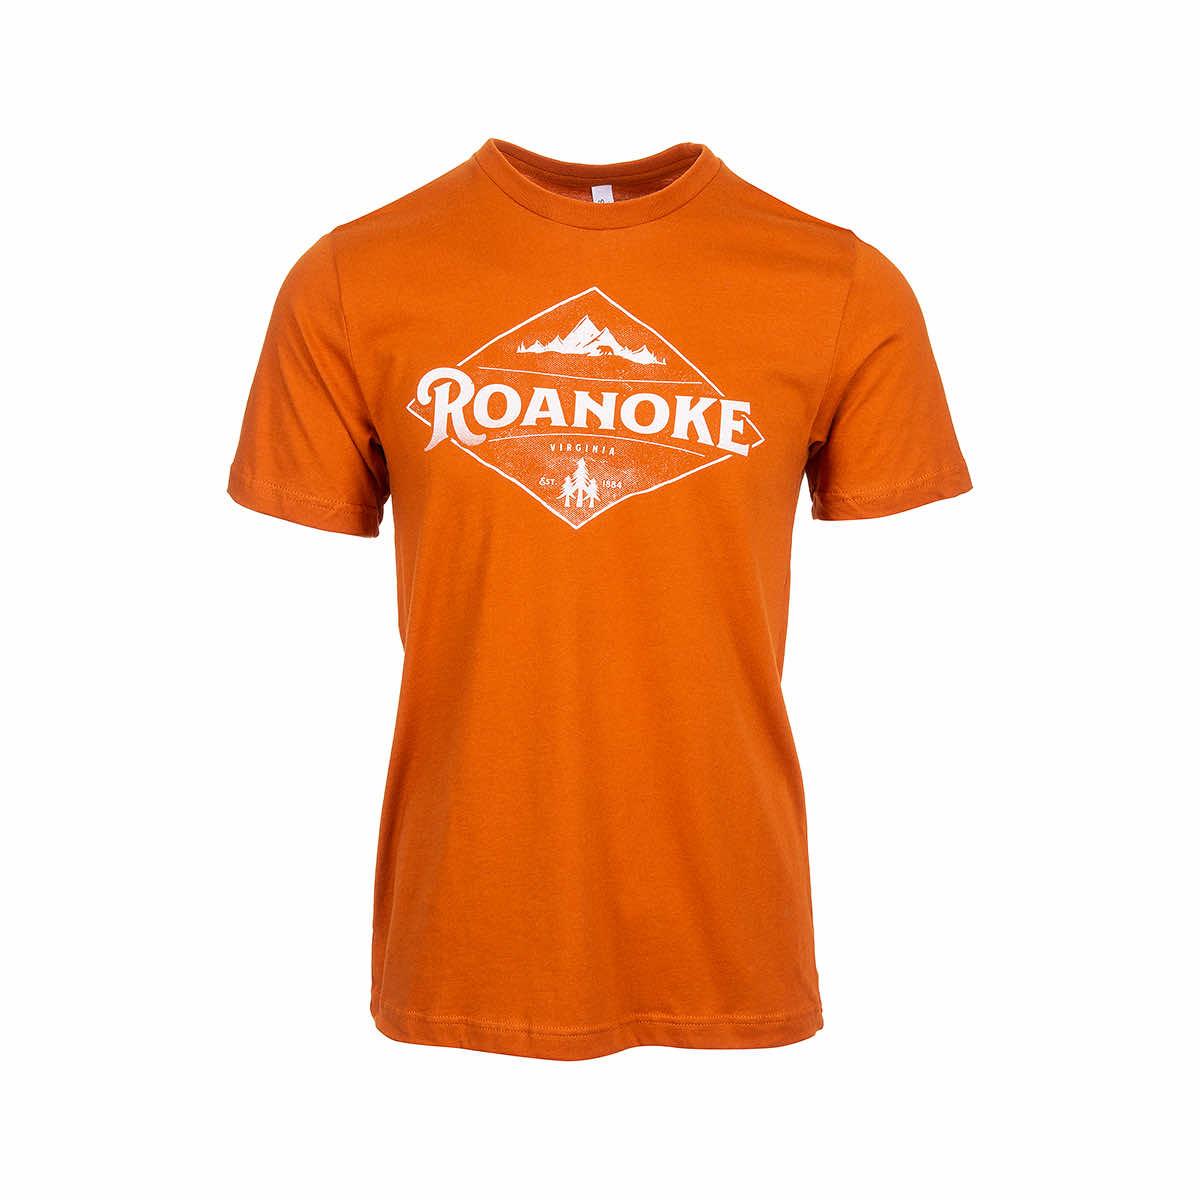  Roanoke Everlast Diamond Short Sleeve T- Shirt